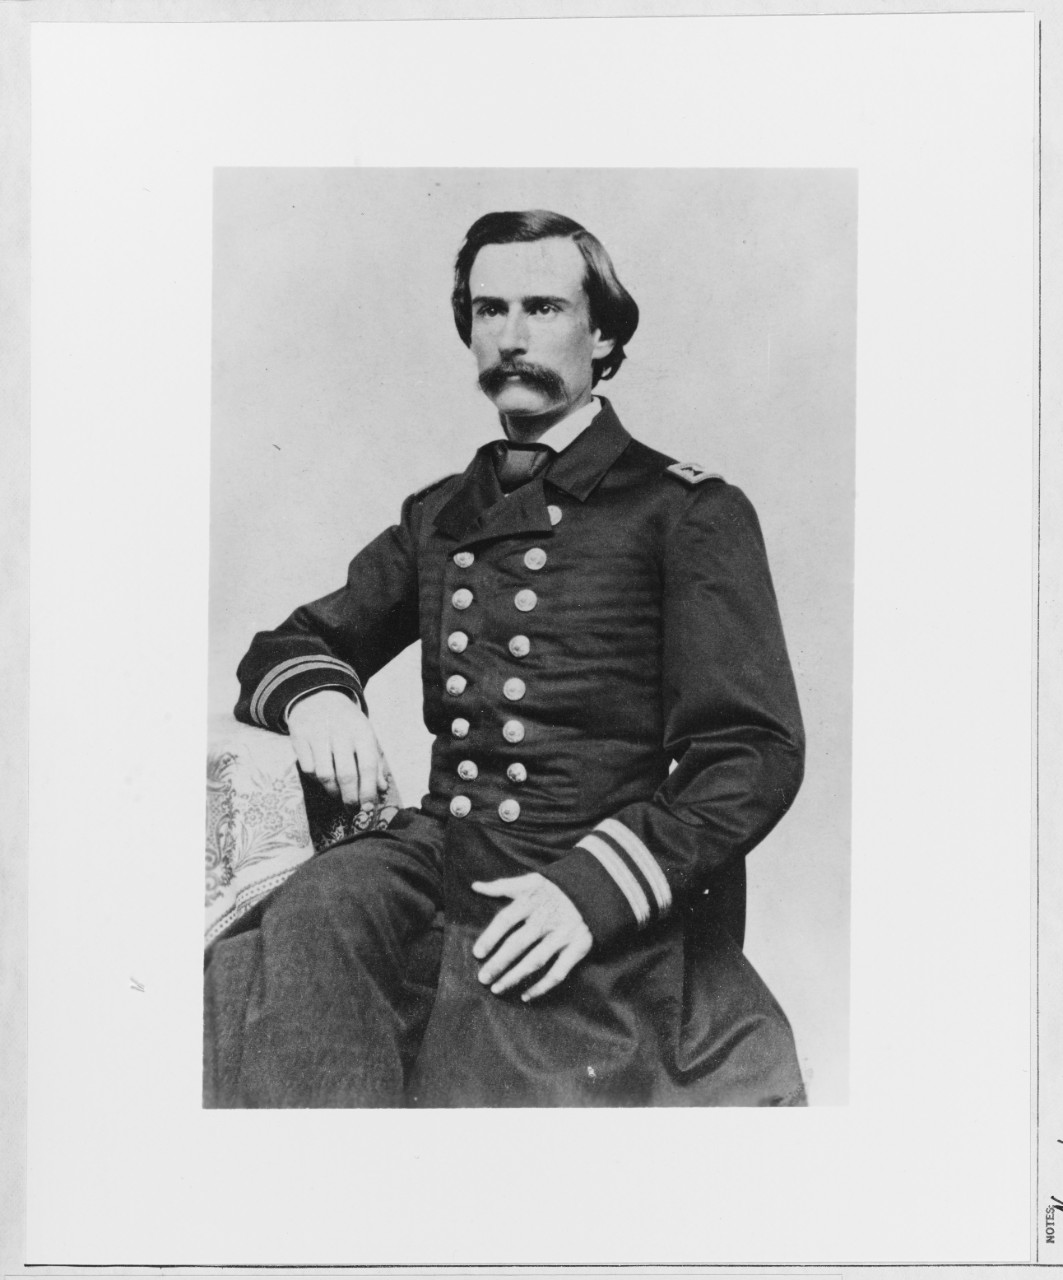 Lieutenant Commander Francis H. Baker, USN